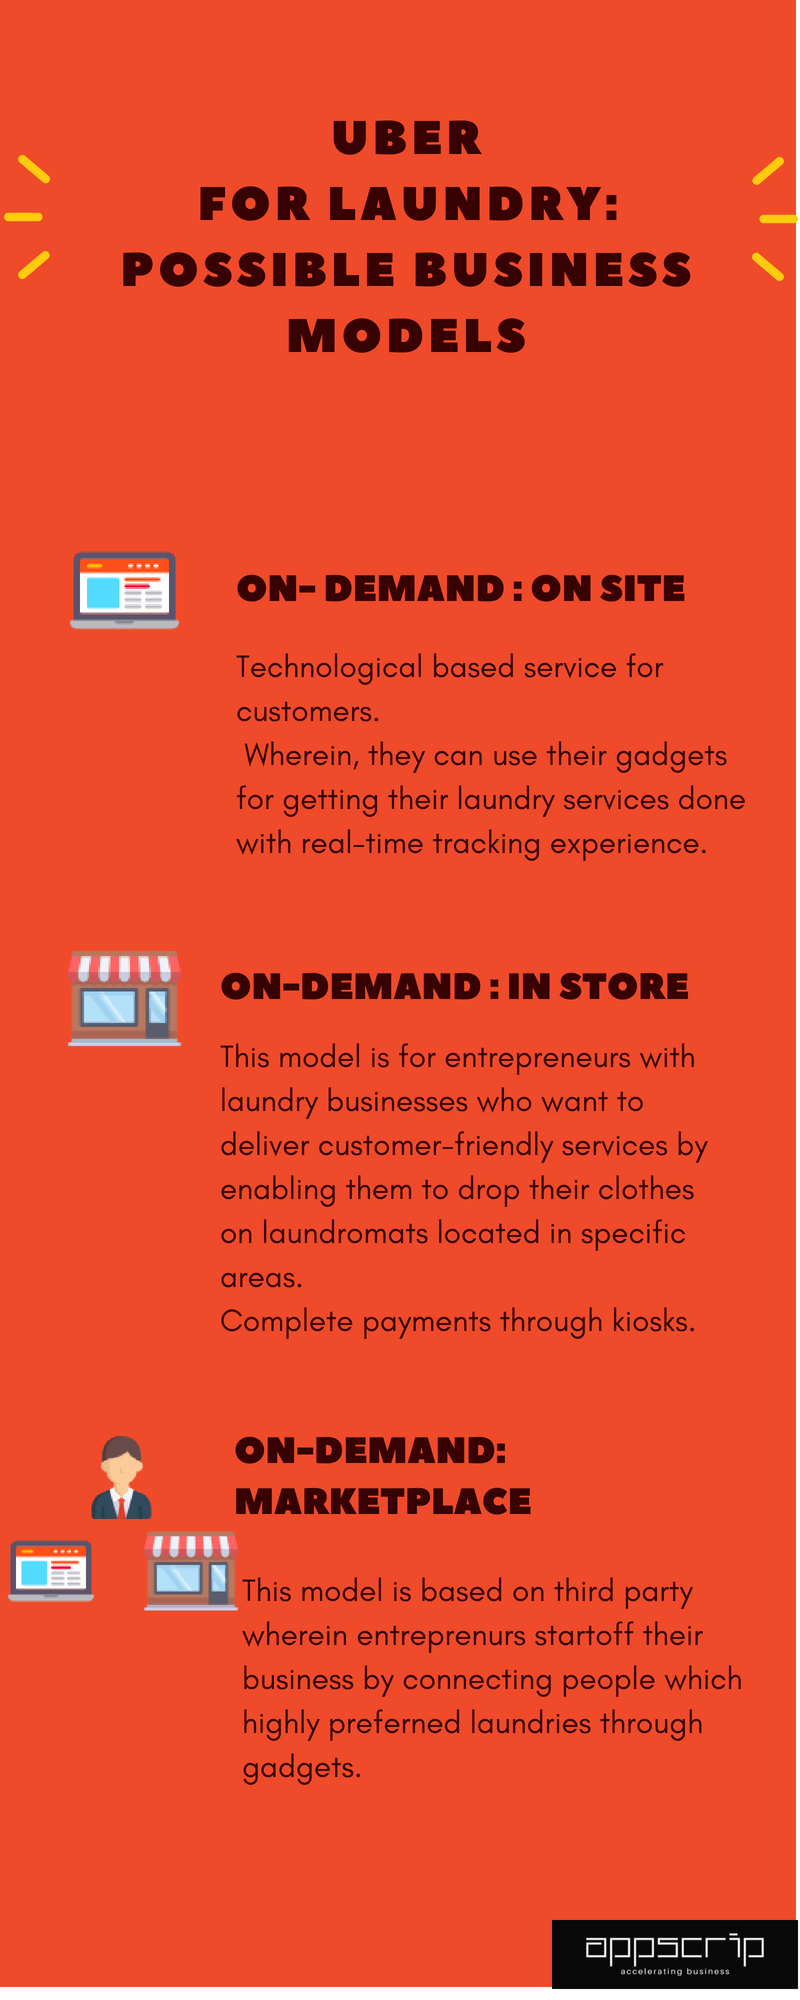 Uber for laundry: On-Demand Laundry Business Model